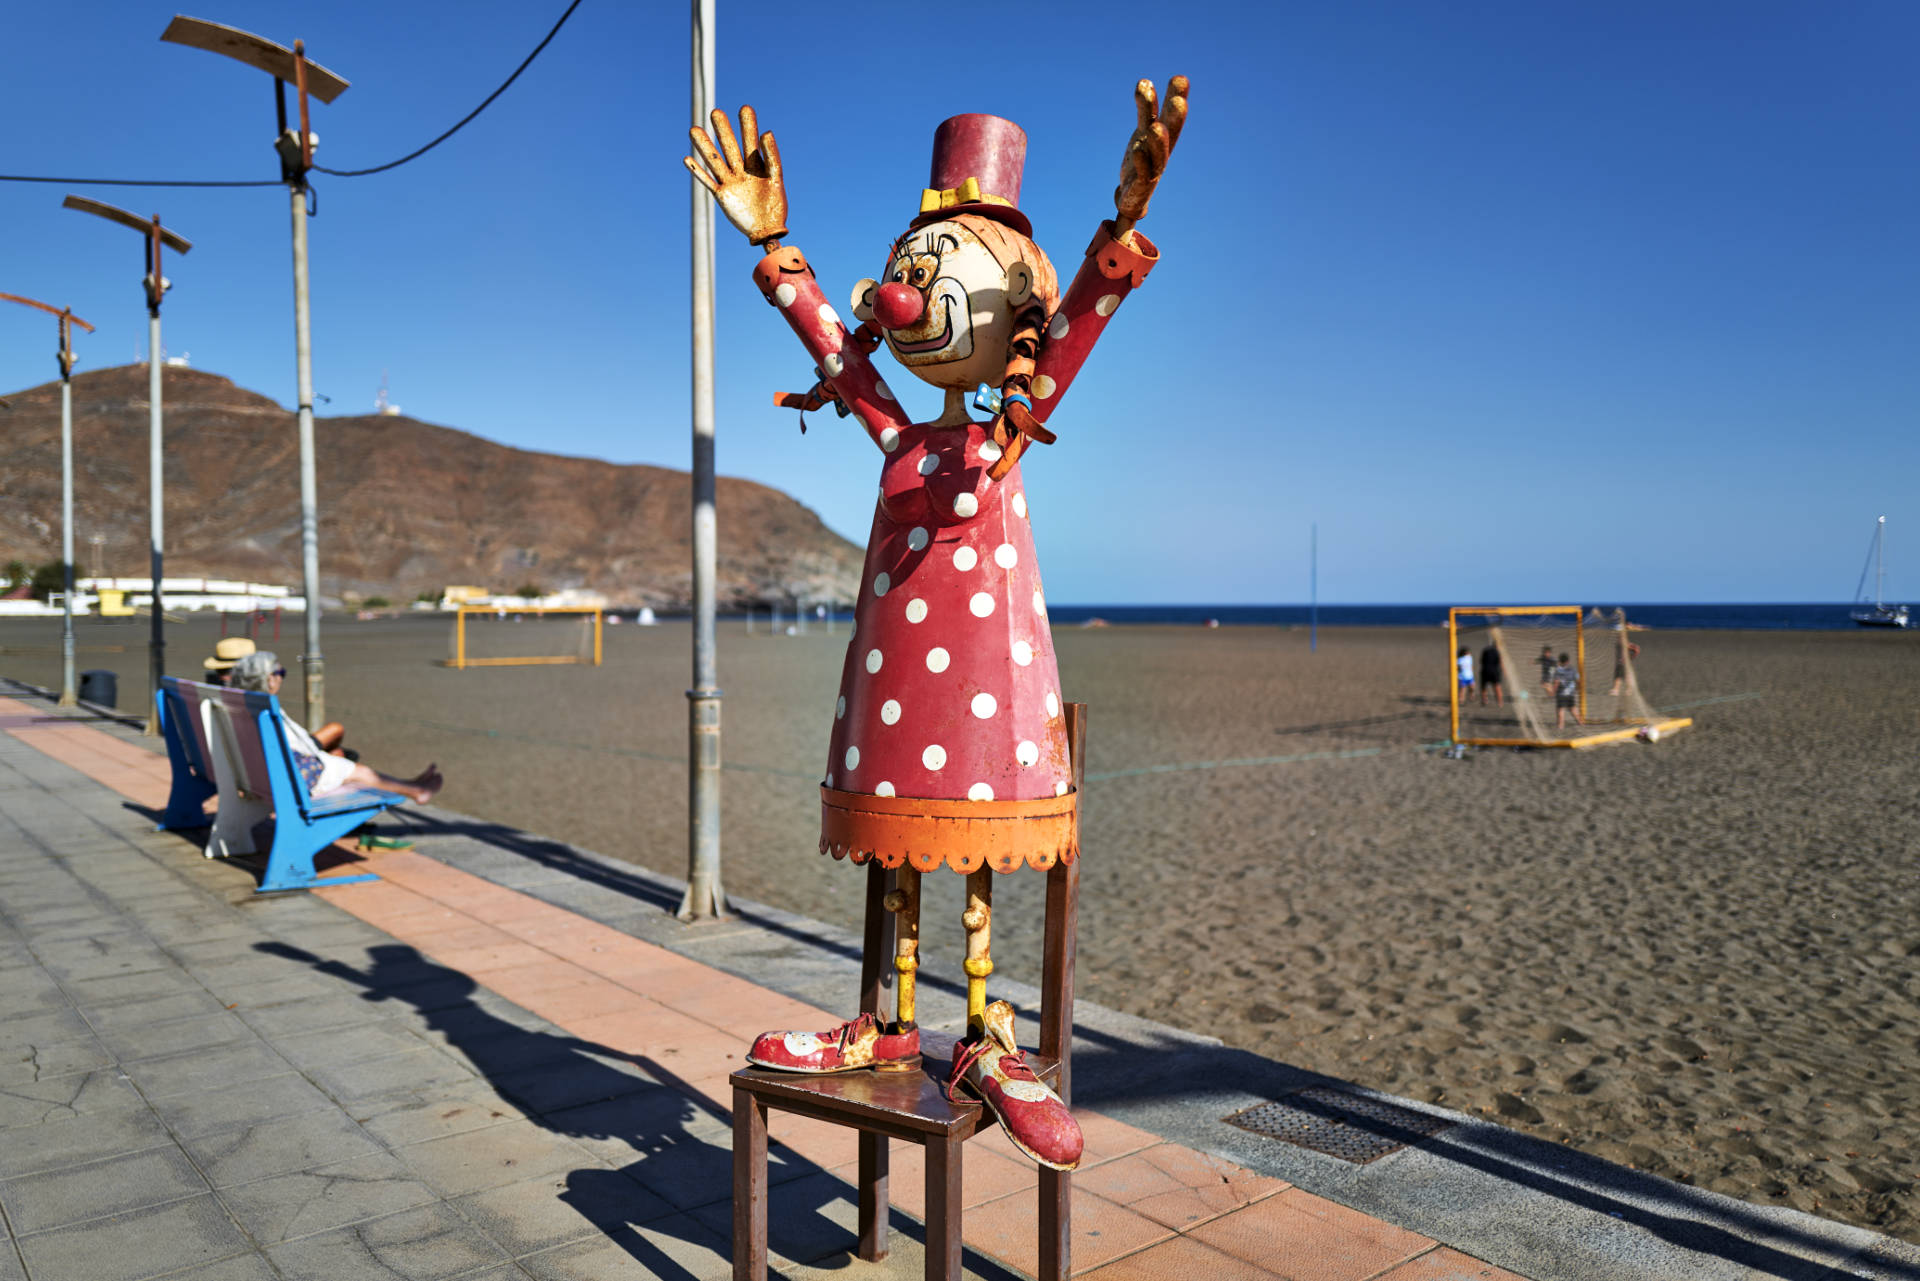 Am paseo marítimo von Gran Tarajal Fuerteventura – das Symbol des int. Clown Festivals "Tran Tran".